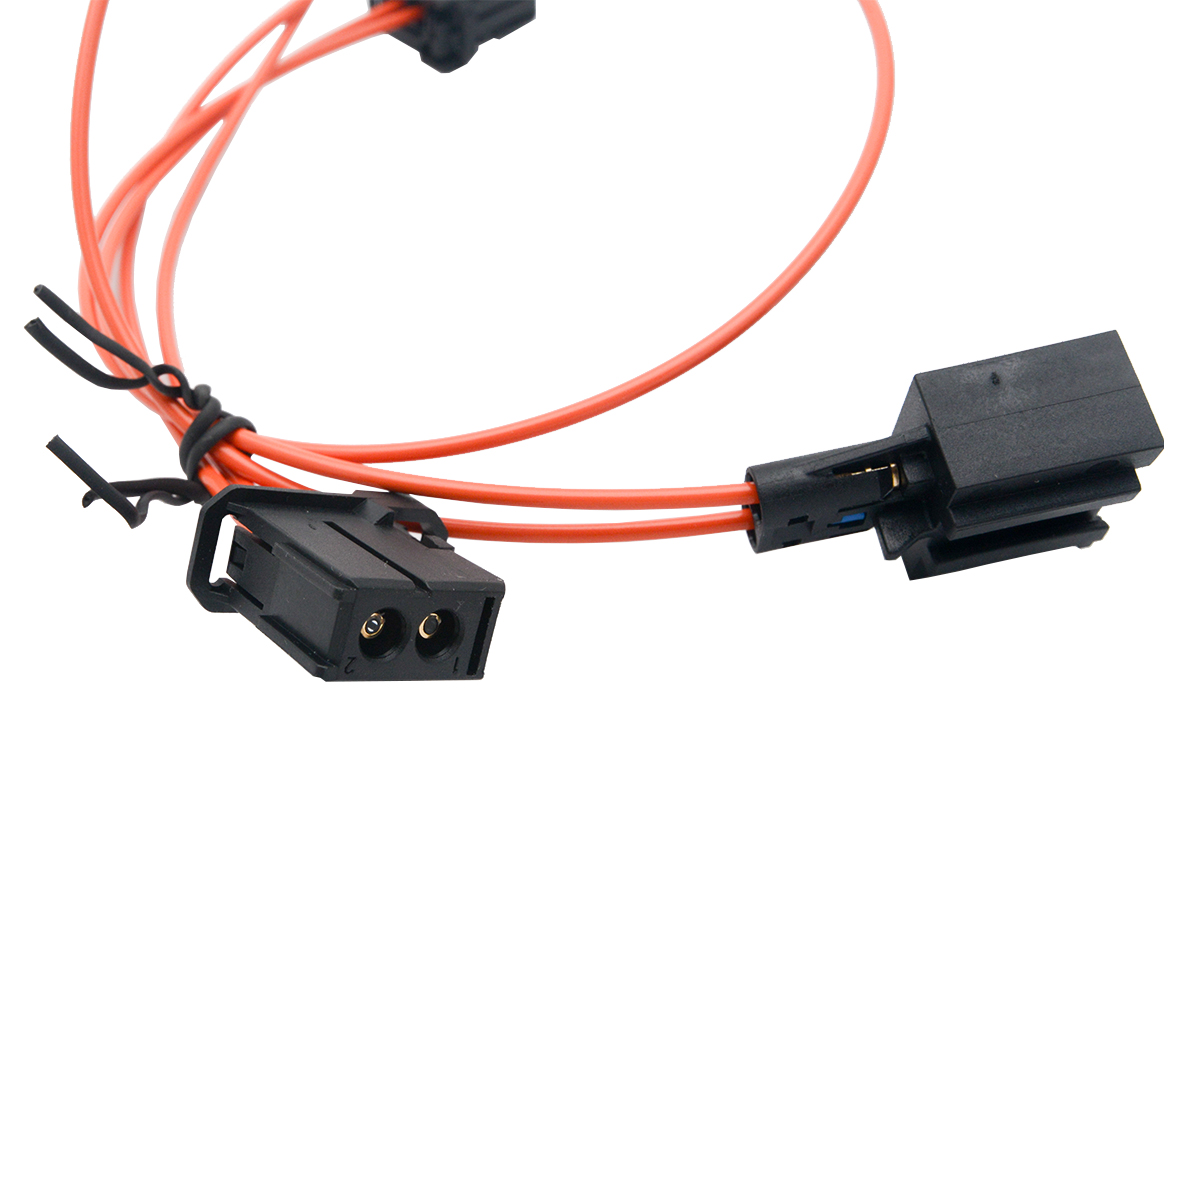 MOST Fibre Optic Loop Cable Bypass Connector Fits Mercedes BMW Porsche ...